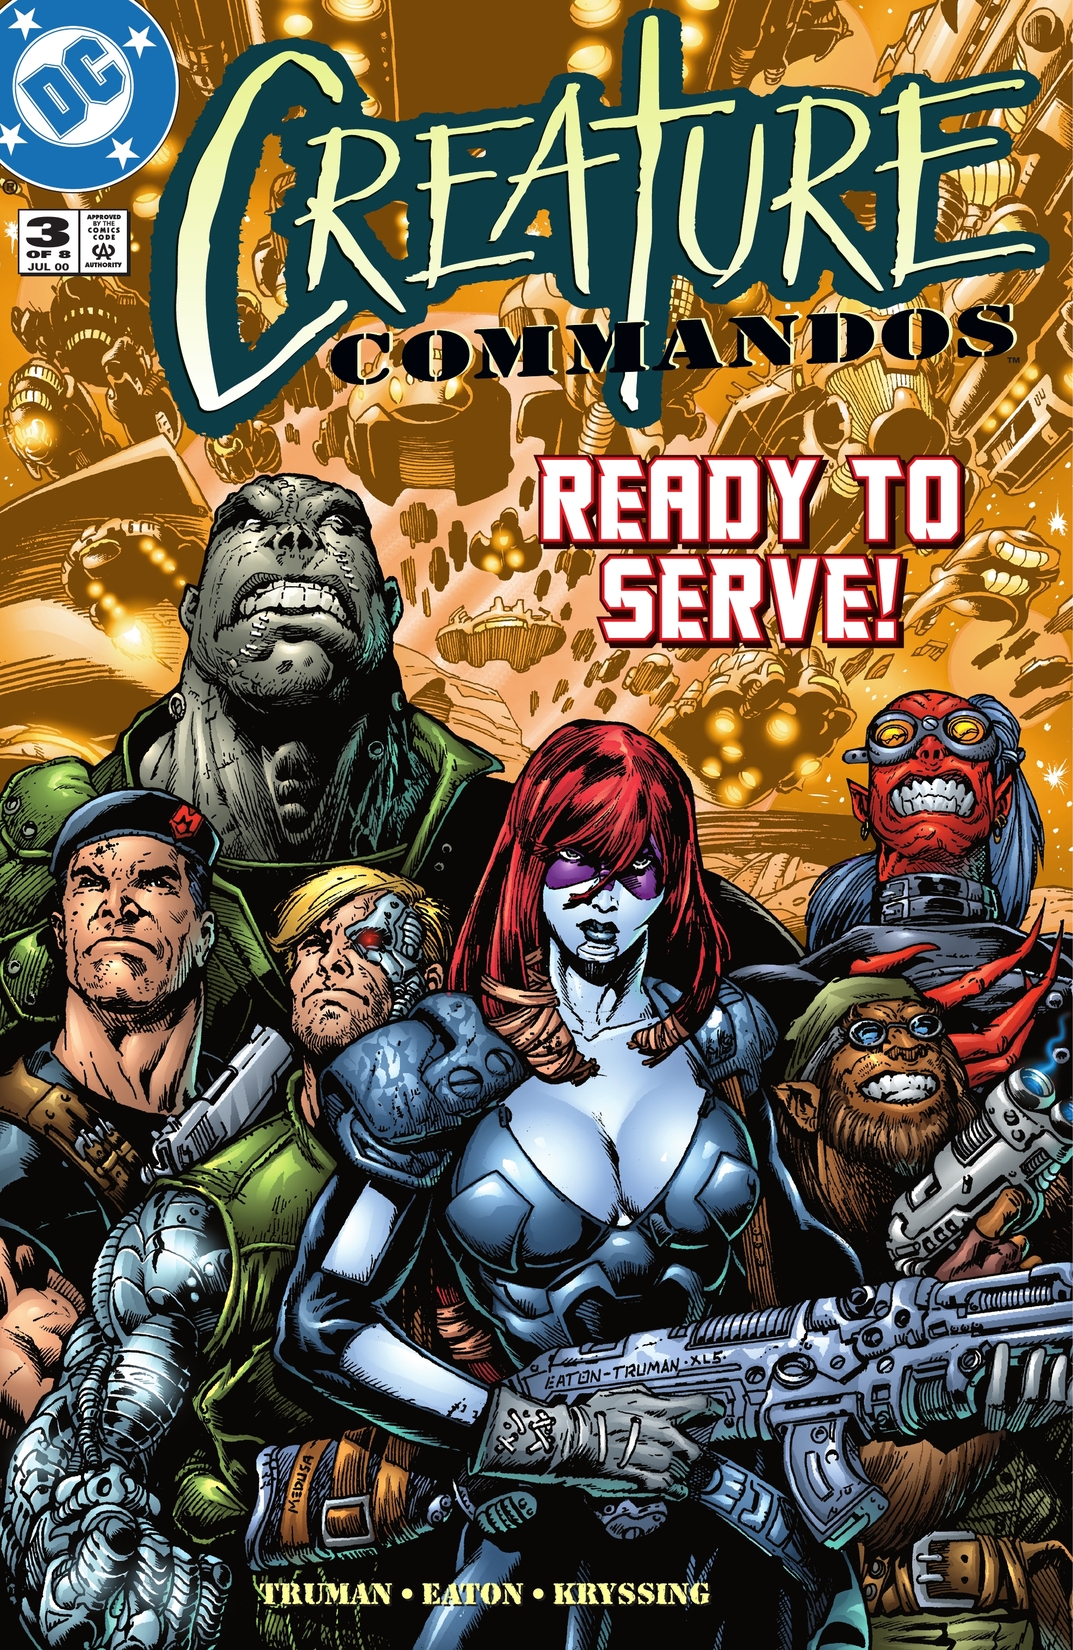 Creature Commandos #3 preview images